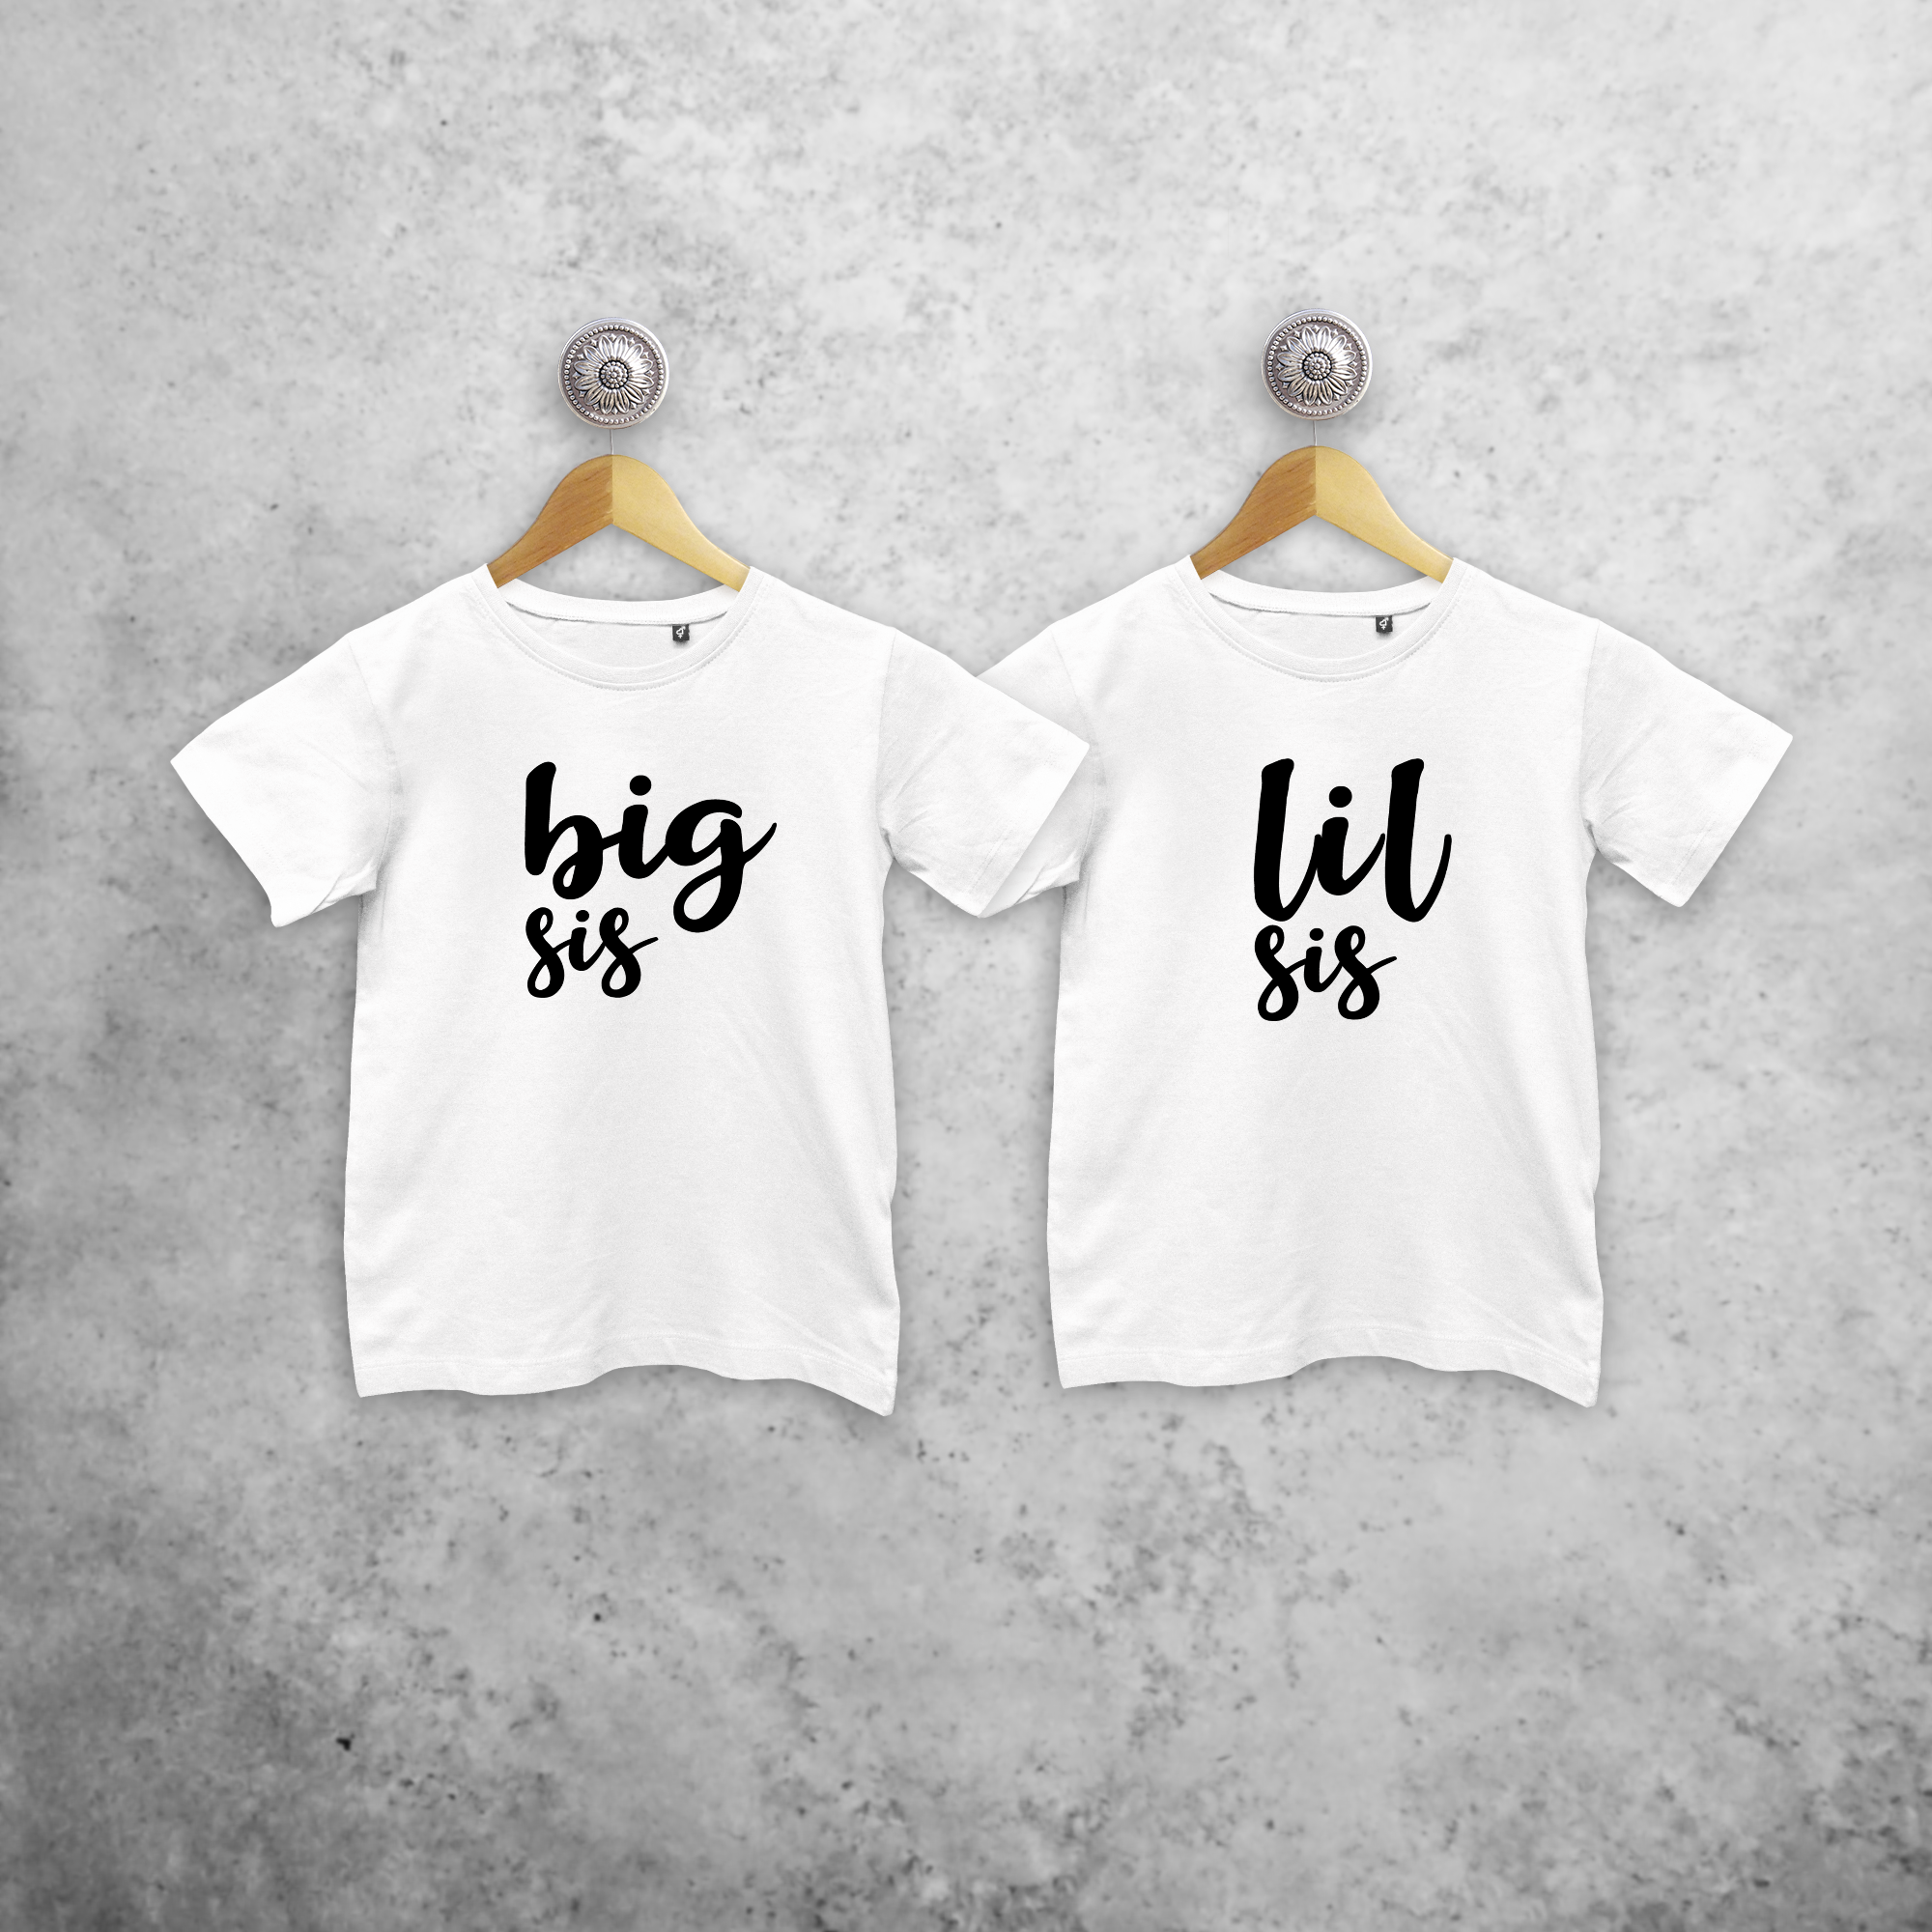 'Big sis' & 'Lil sis' kids sibling shirts